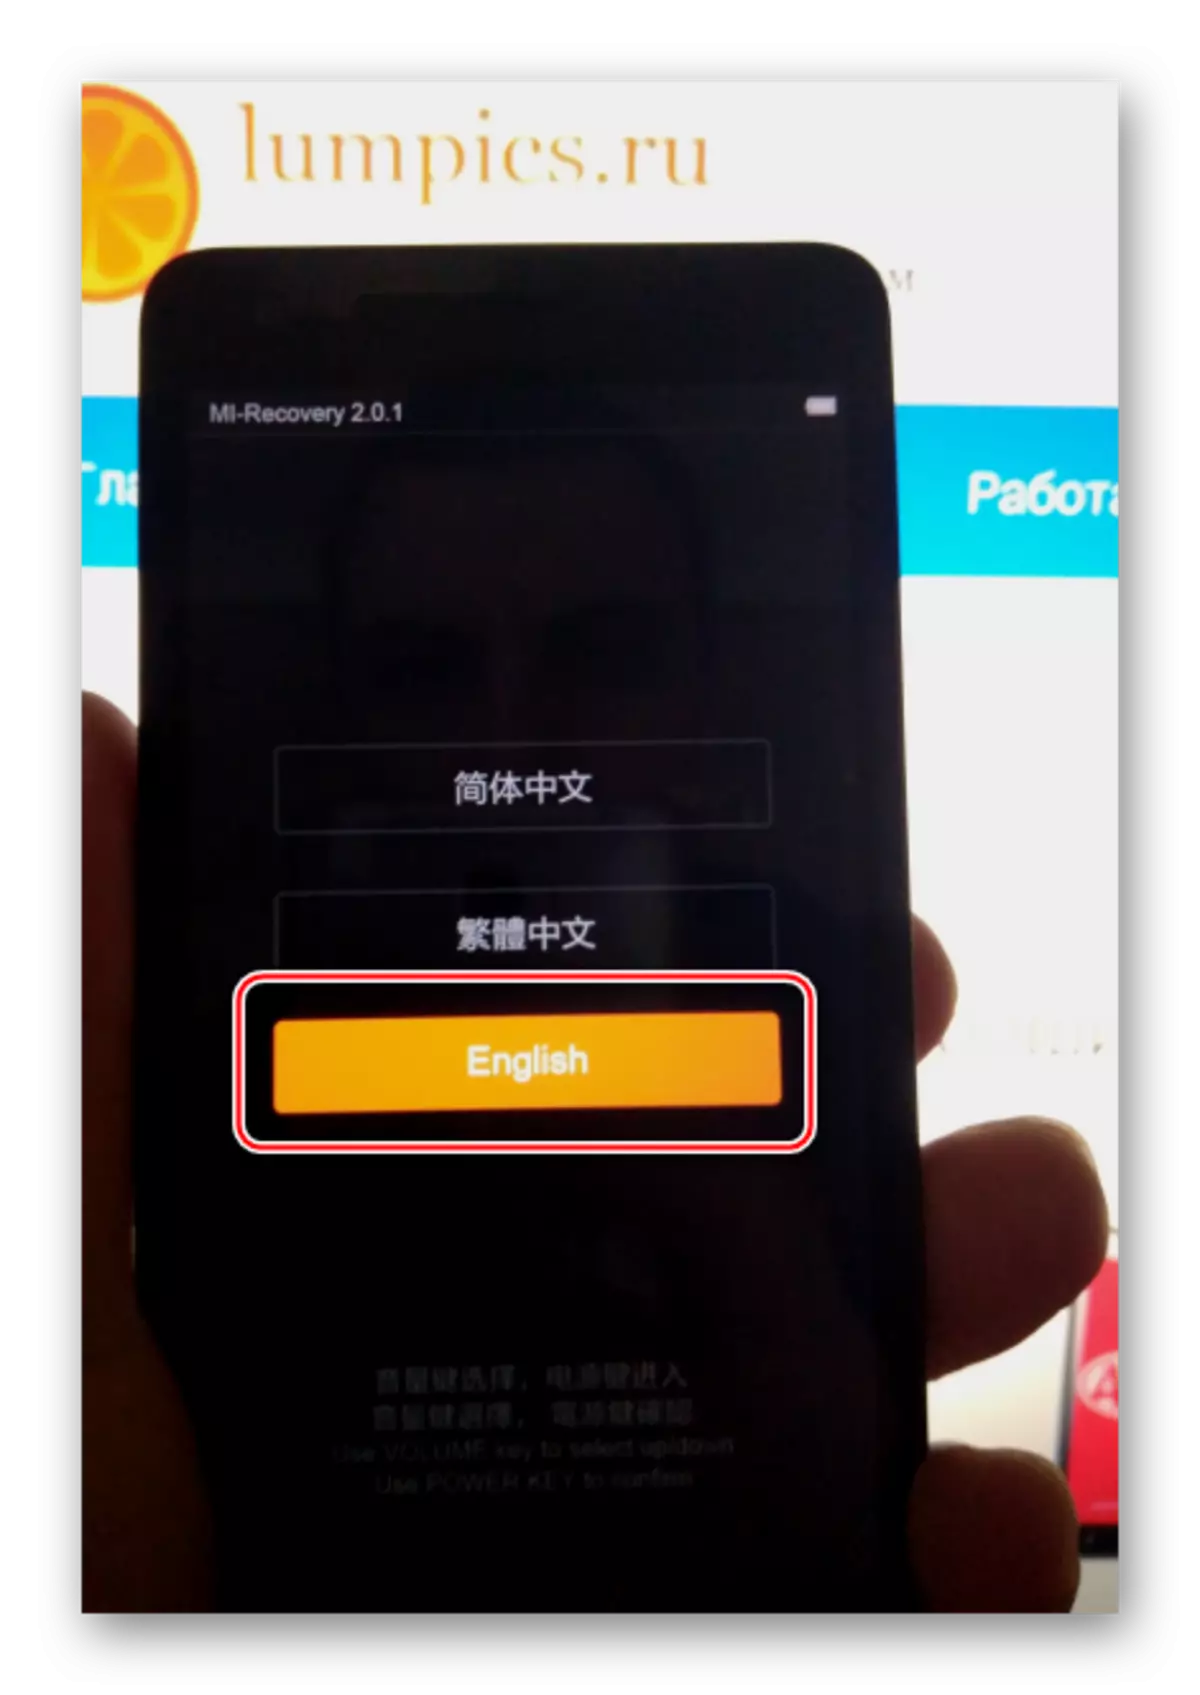 Xiaomi Redmi 2 ŝanĝas lingvon de la interfaco de fabriko